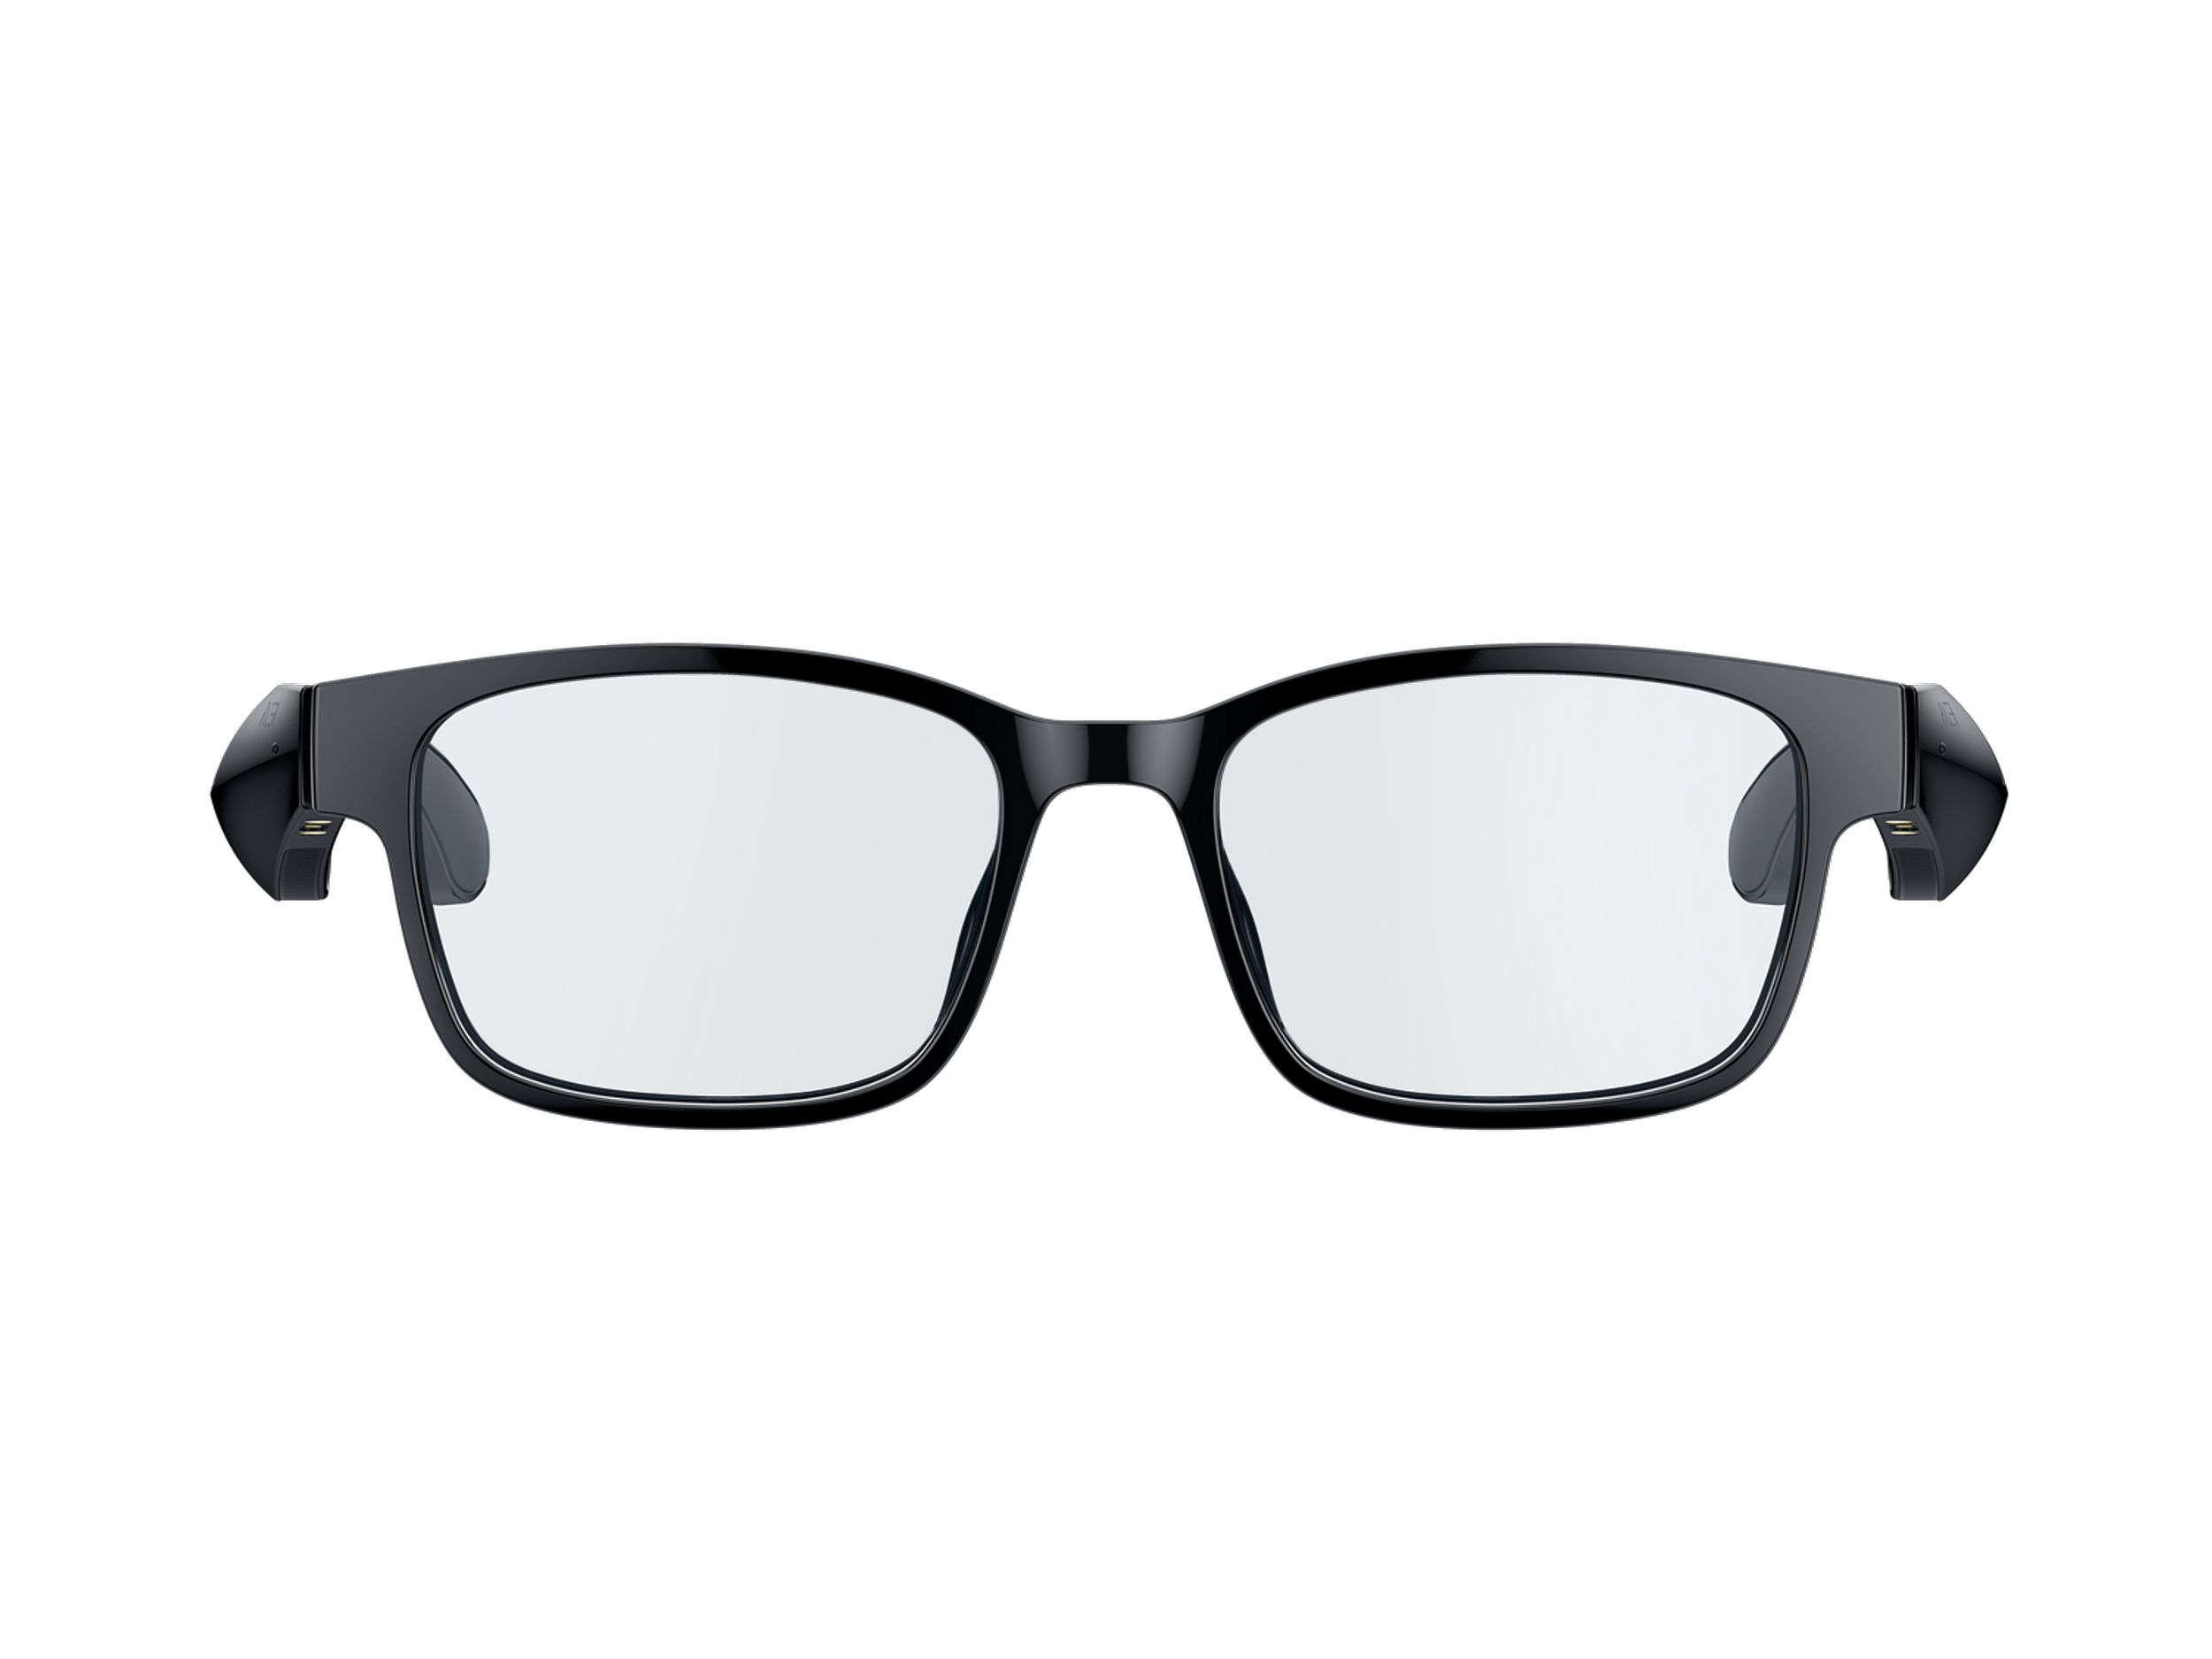 RAZER Anzu S M, Open-ear Glasses Smart schwarz Bluetooth